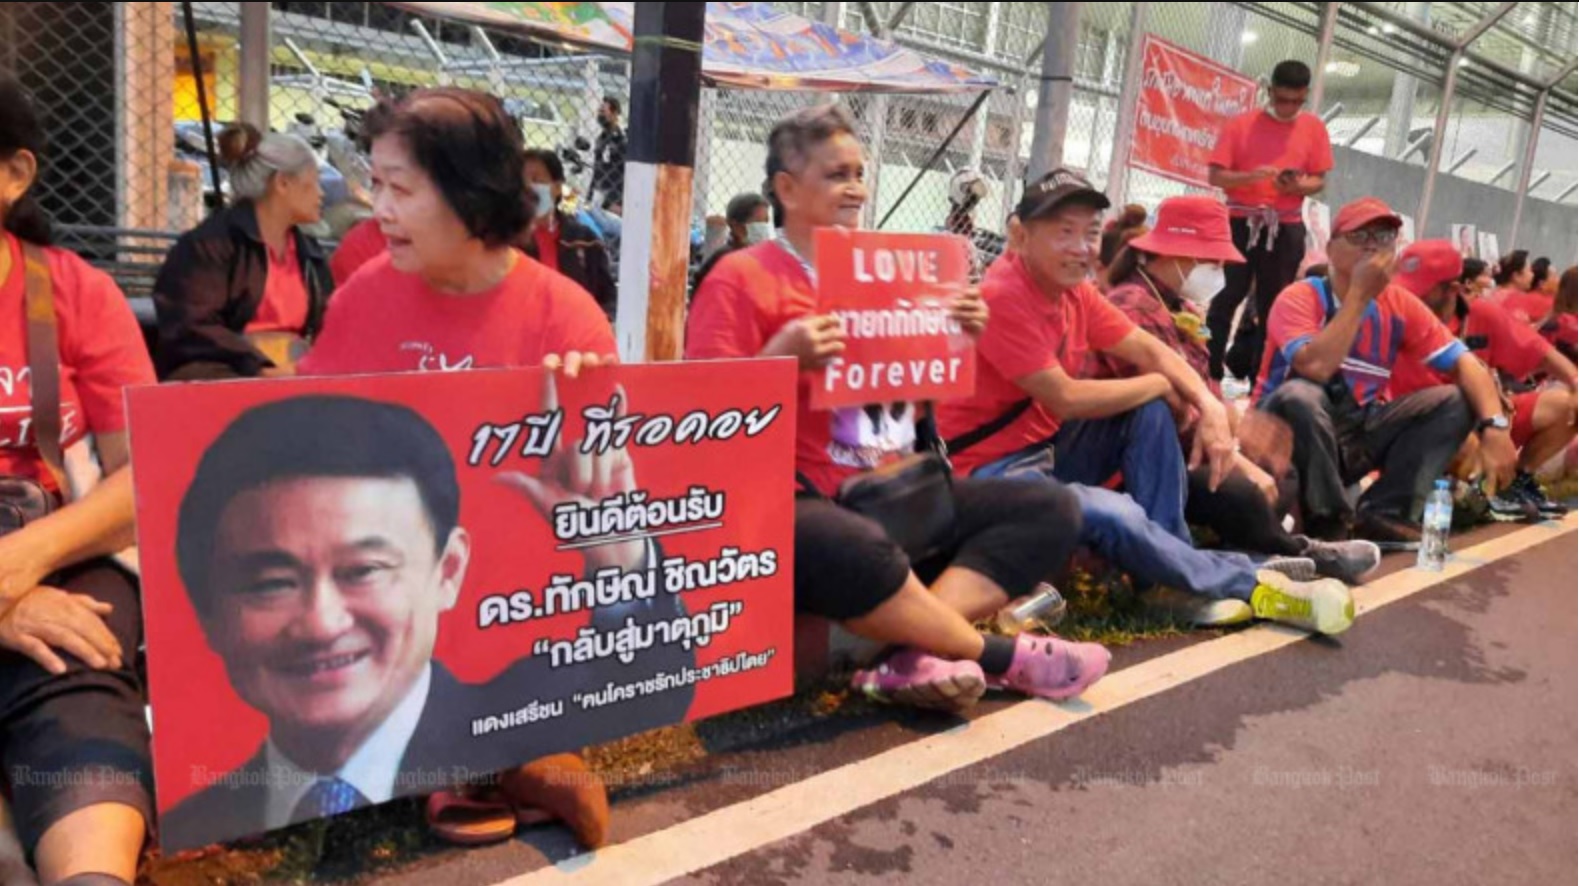 Former Prime Minister Thaksin Shinawatra returns to Thailand - photo 2.